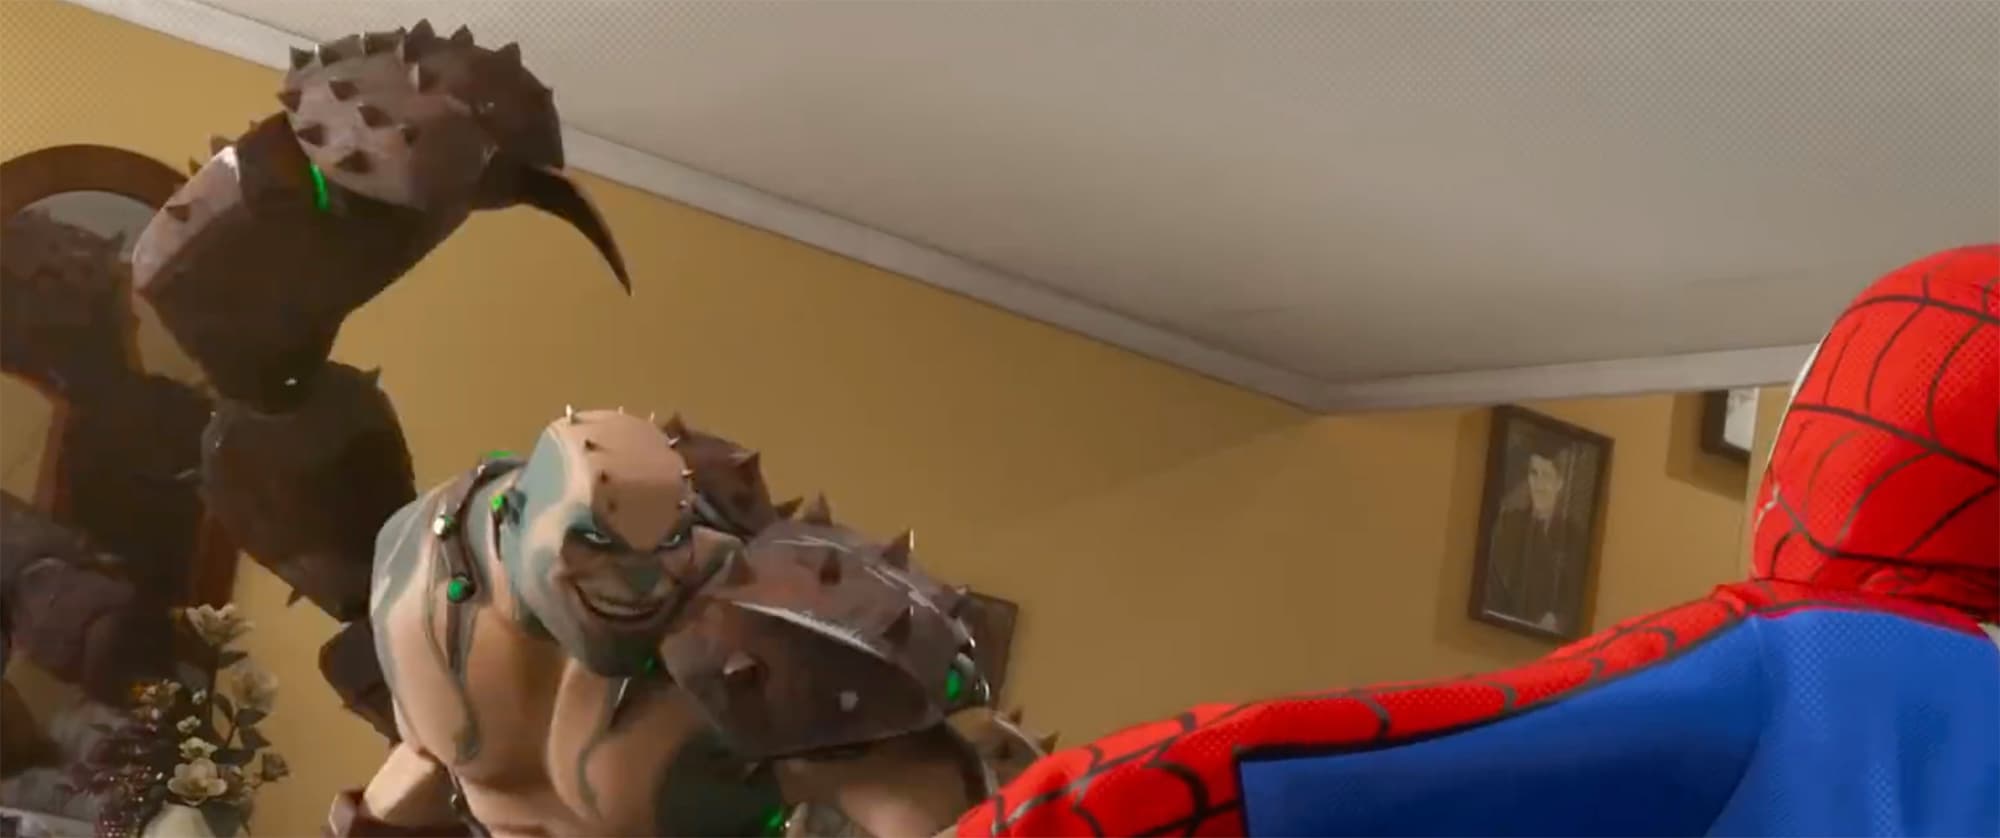 Scorpion in "Spider-Man: Into the Spider-Verse"